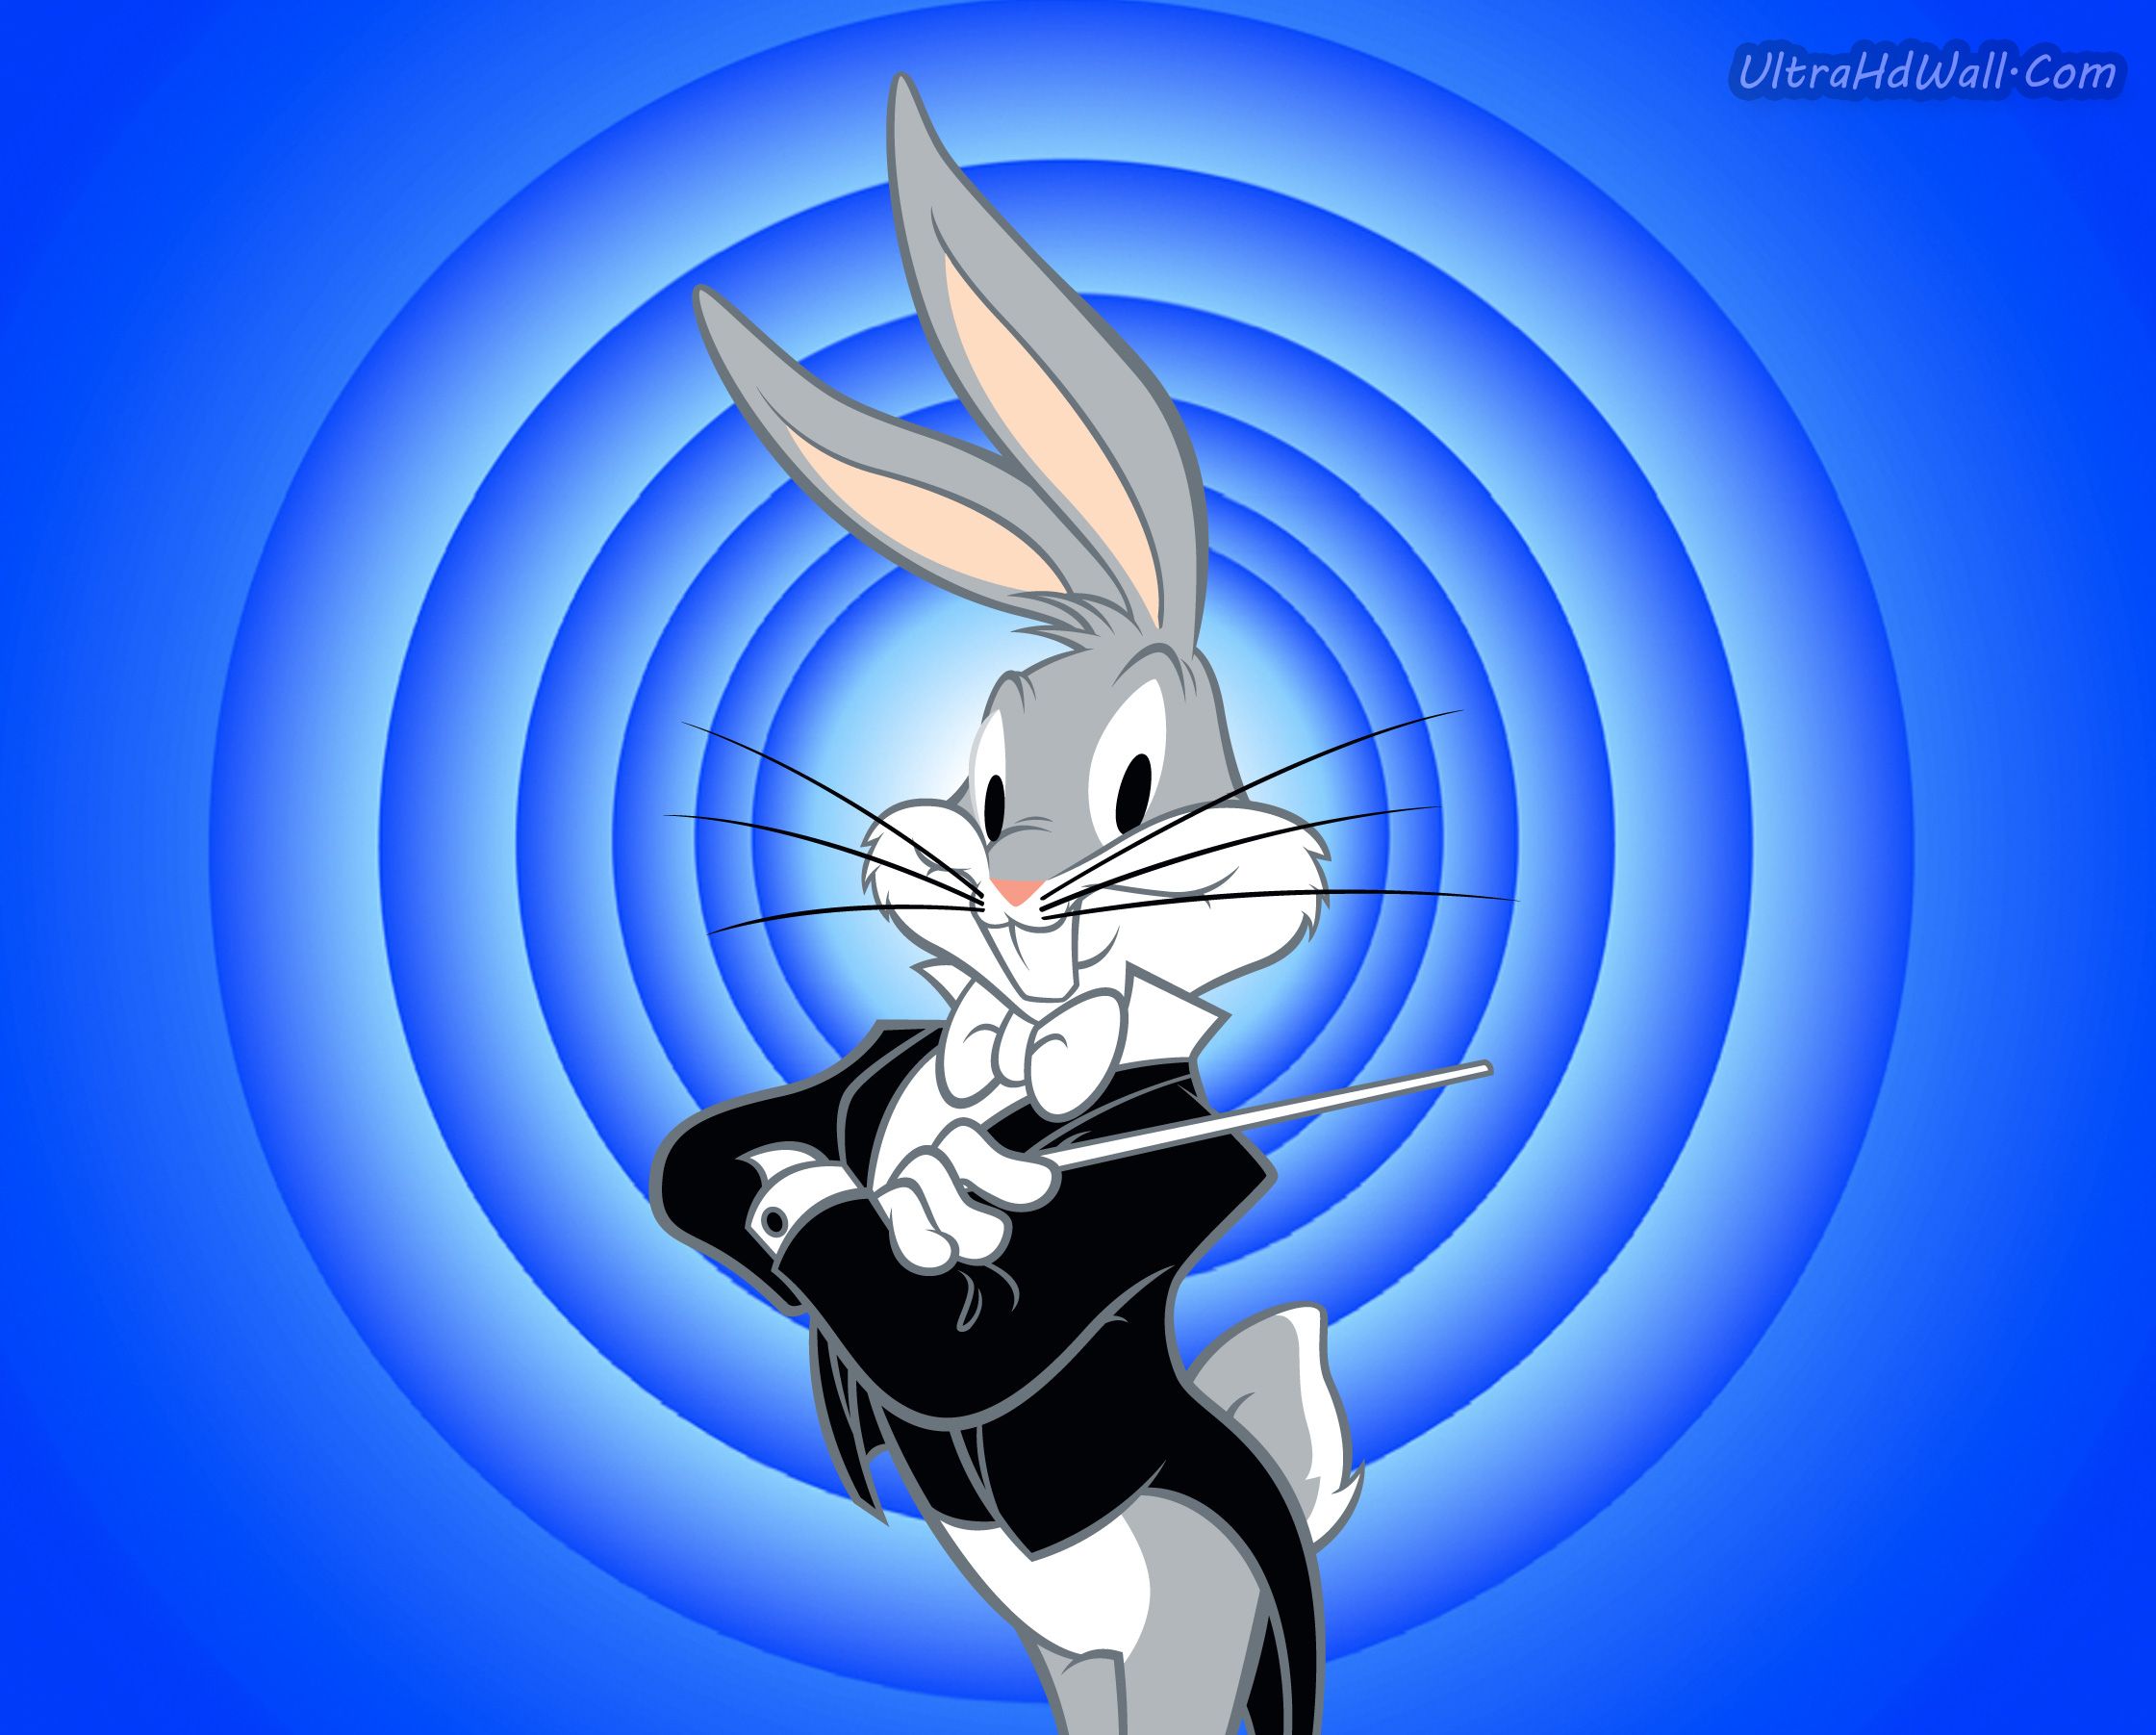 Bugs Bunny is a cartoon character. - Bugs Bunny